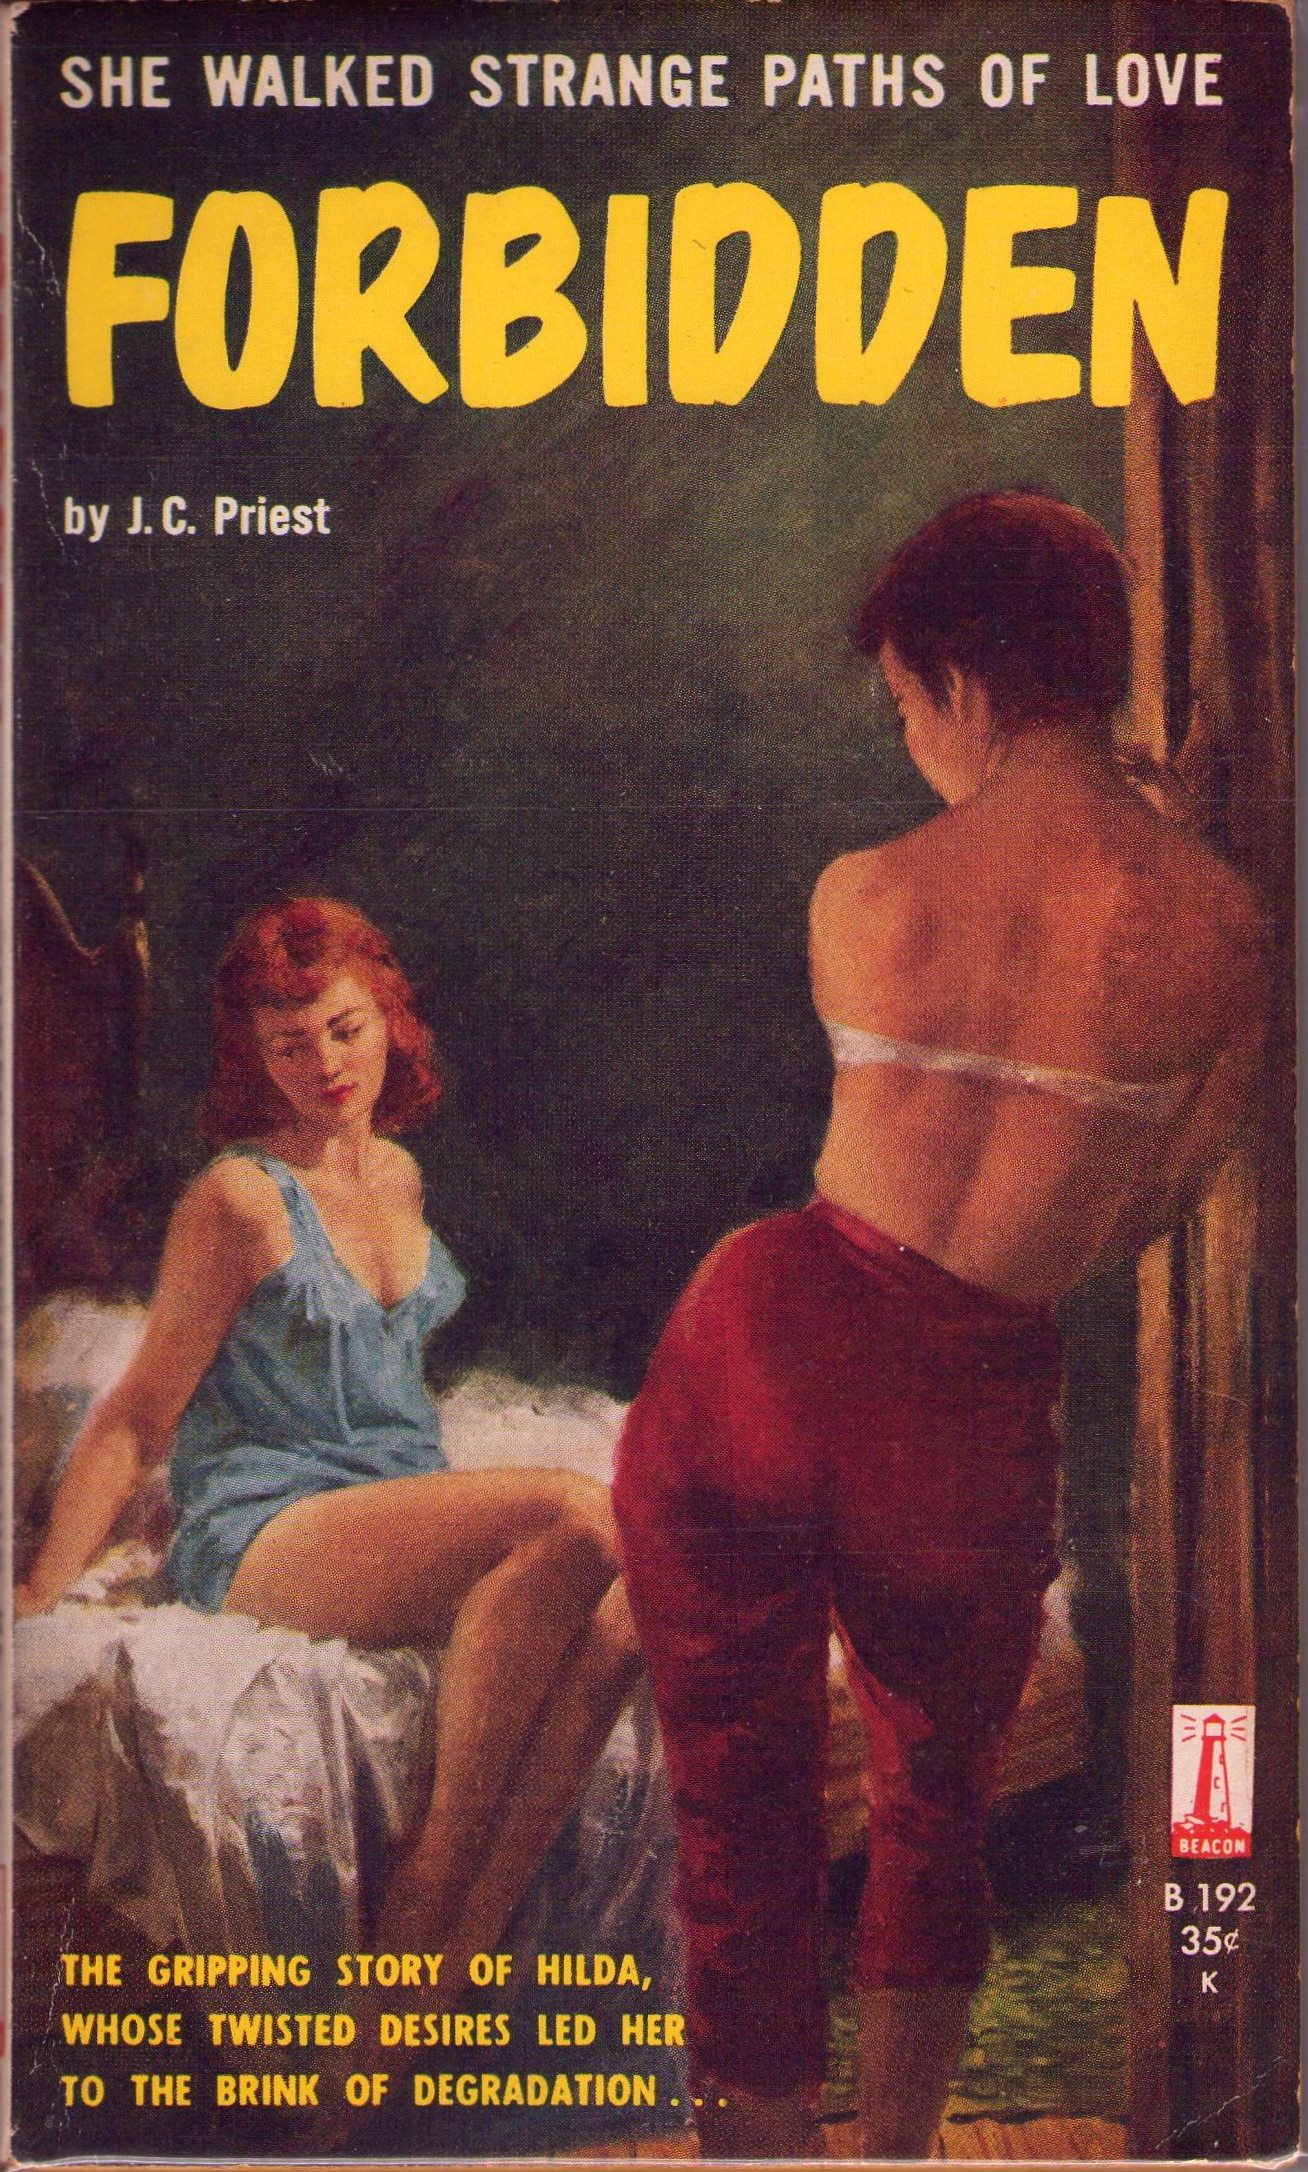 Lesbian pulp fiction